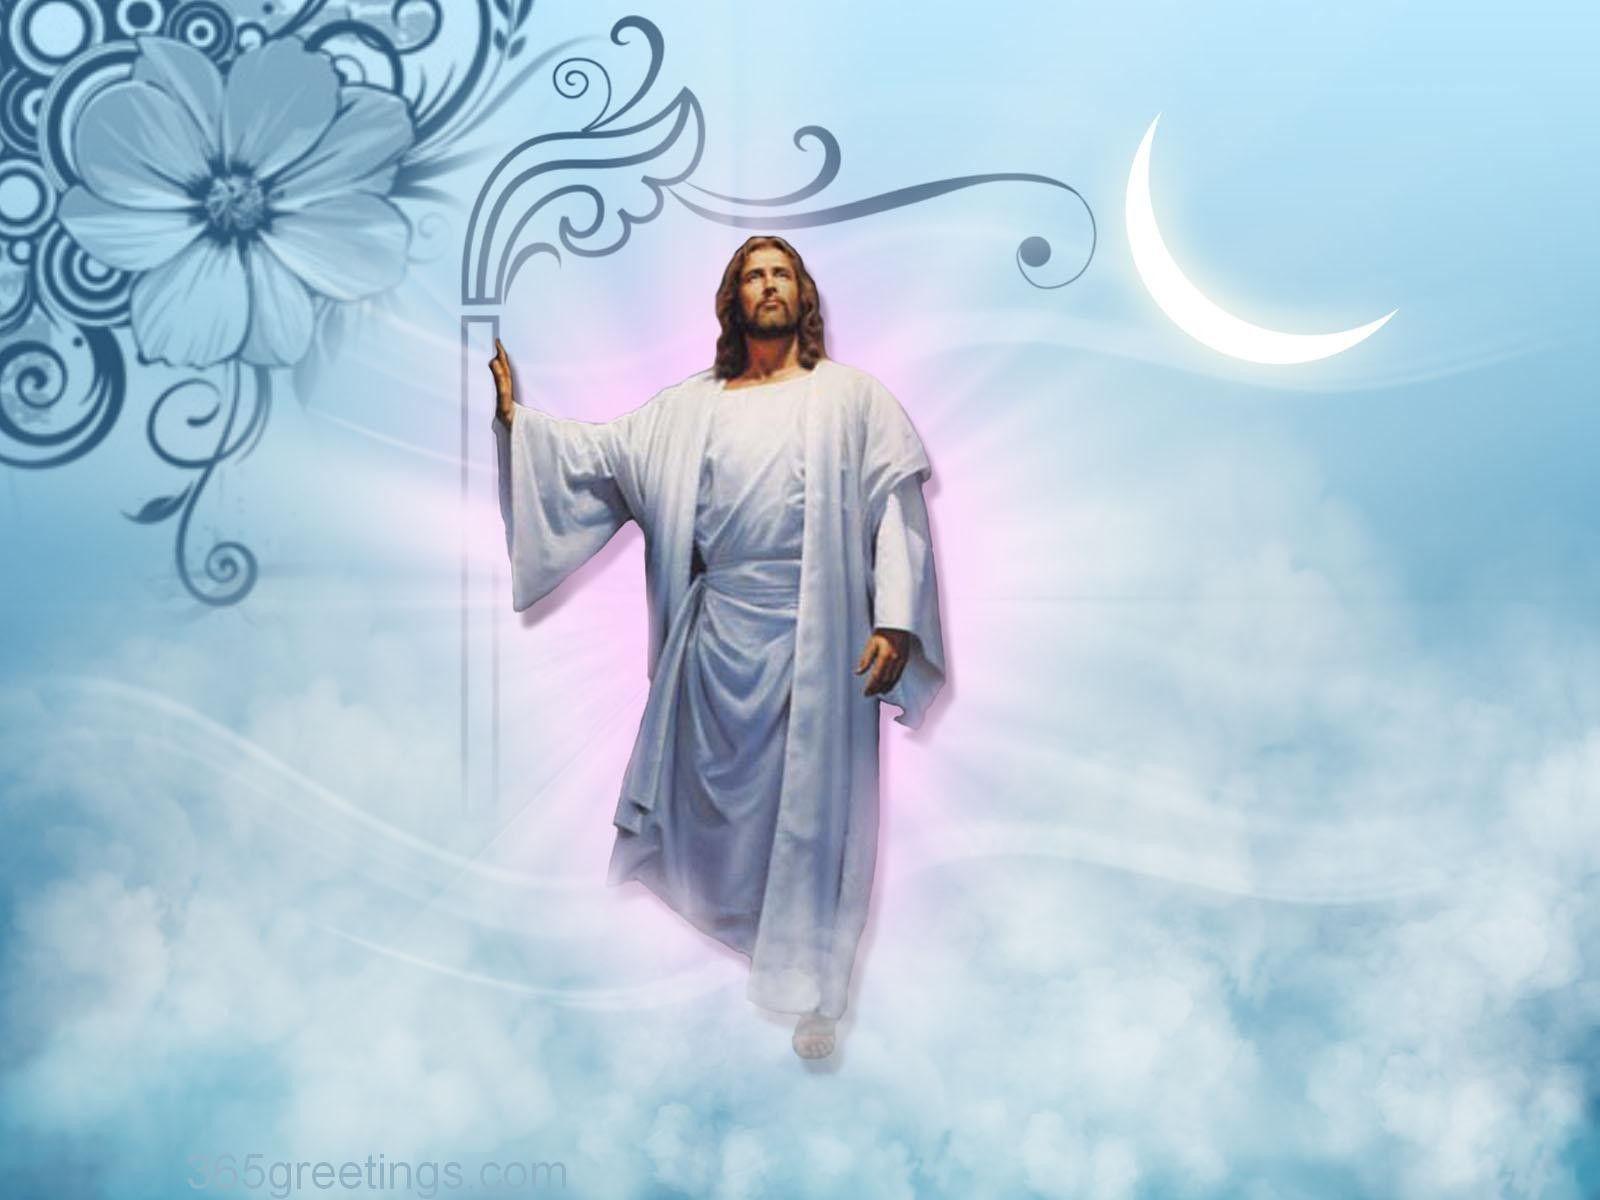 Desktop Image of Jesus HD Jesus HD Wallpaper 1600×1200 Wallpaper Picture Of Jesus (59 Wallpaper). Adorable Wa. Jesus wallpaper, Jesus photo, Jesus picture